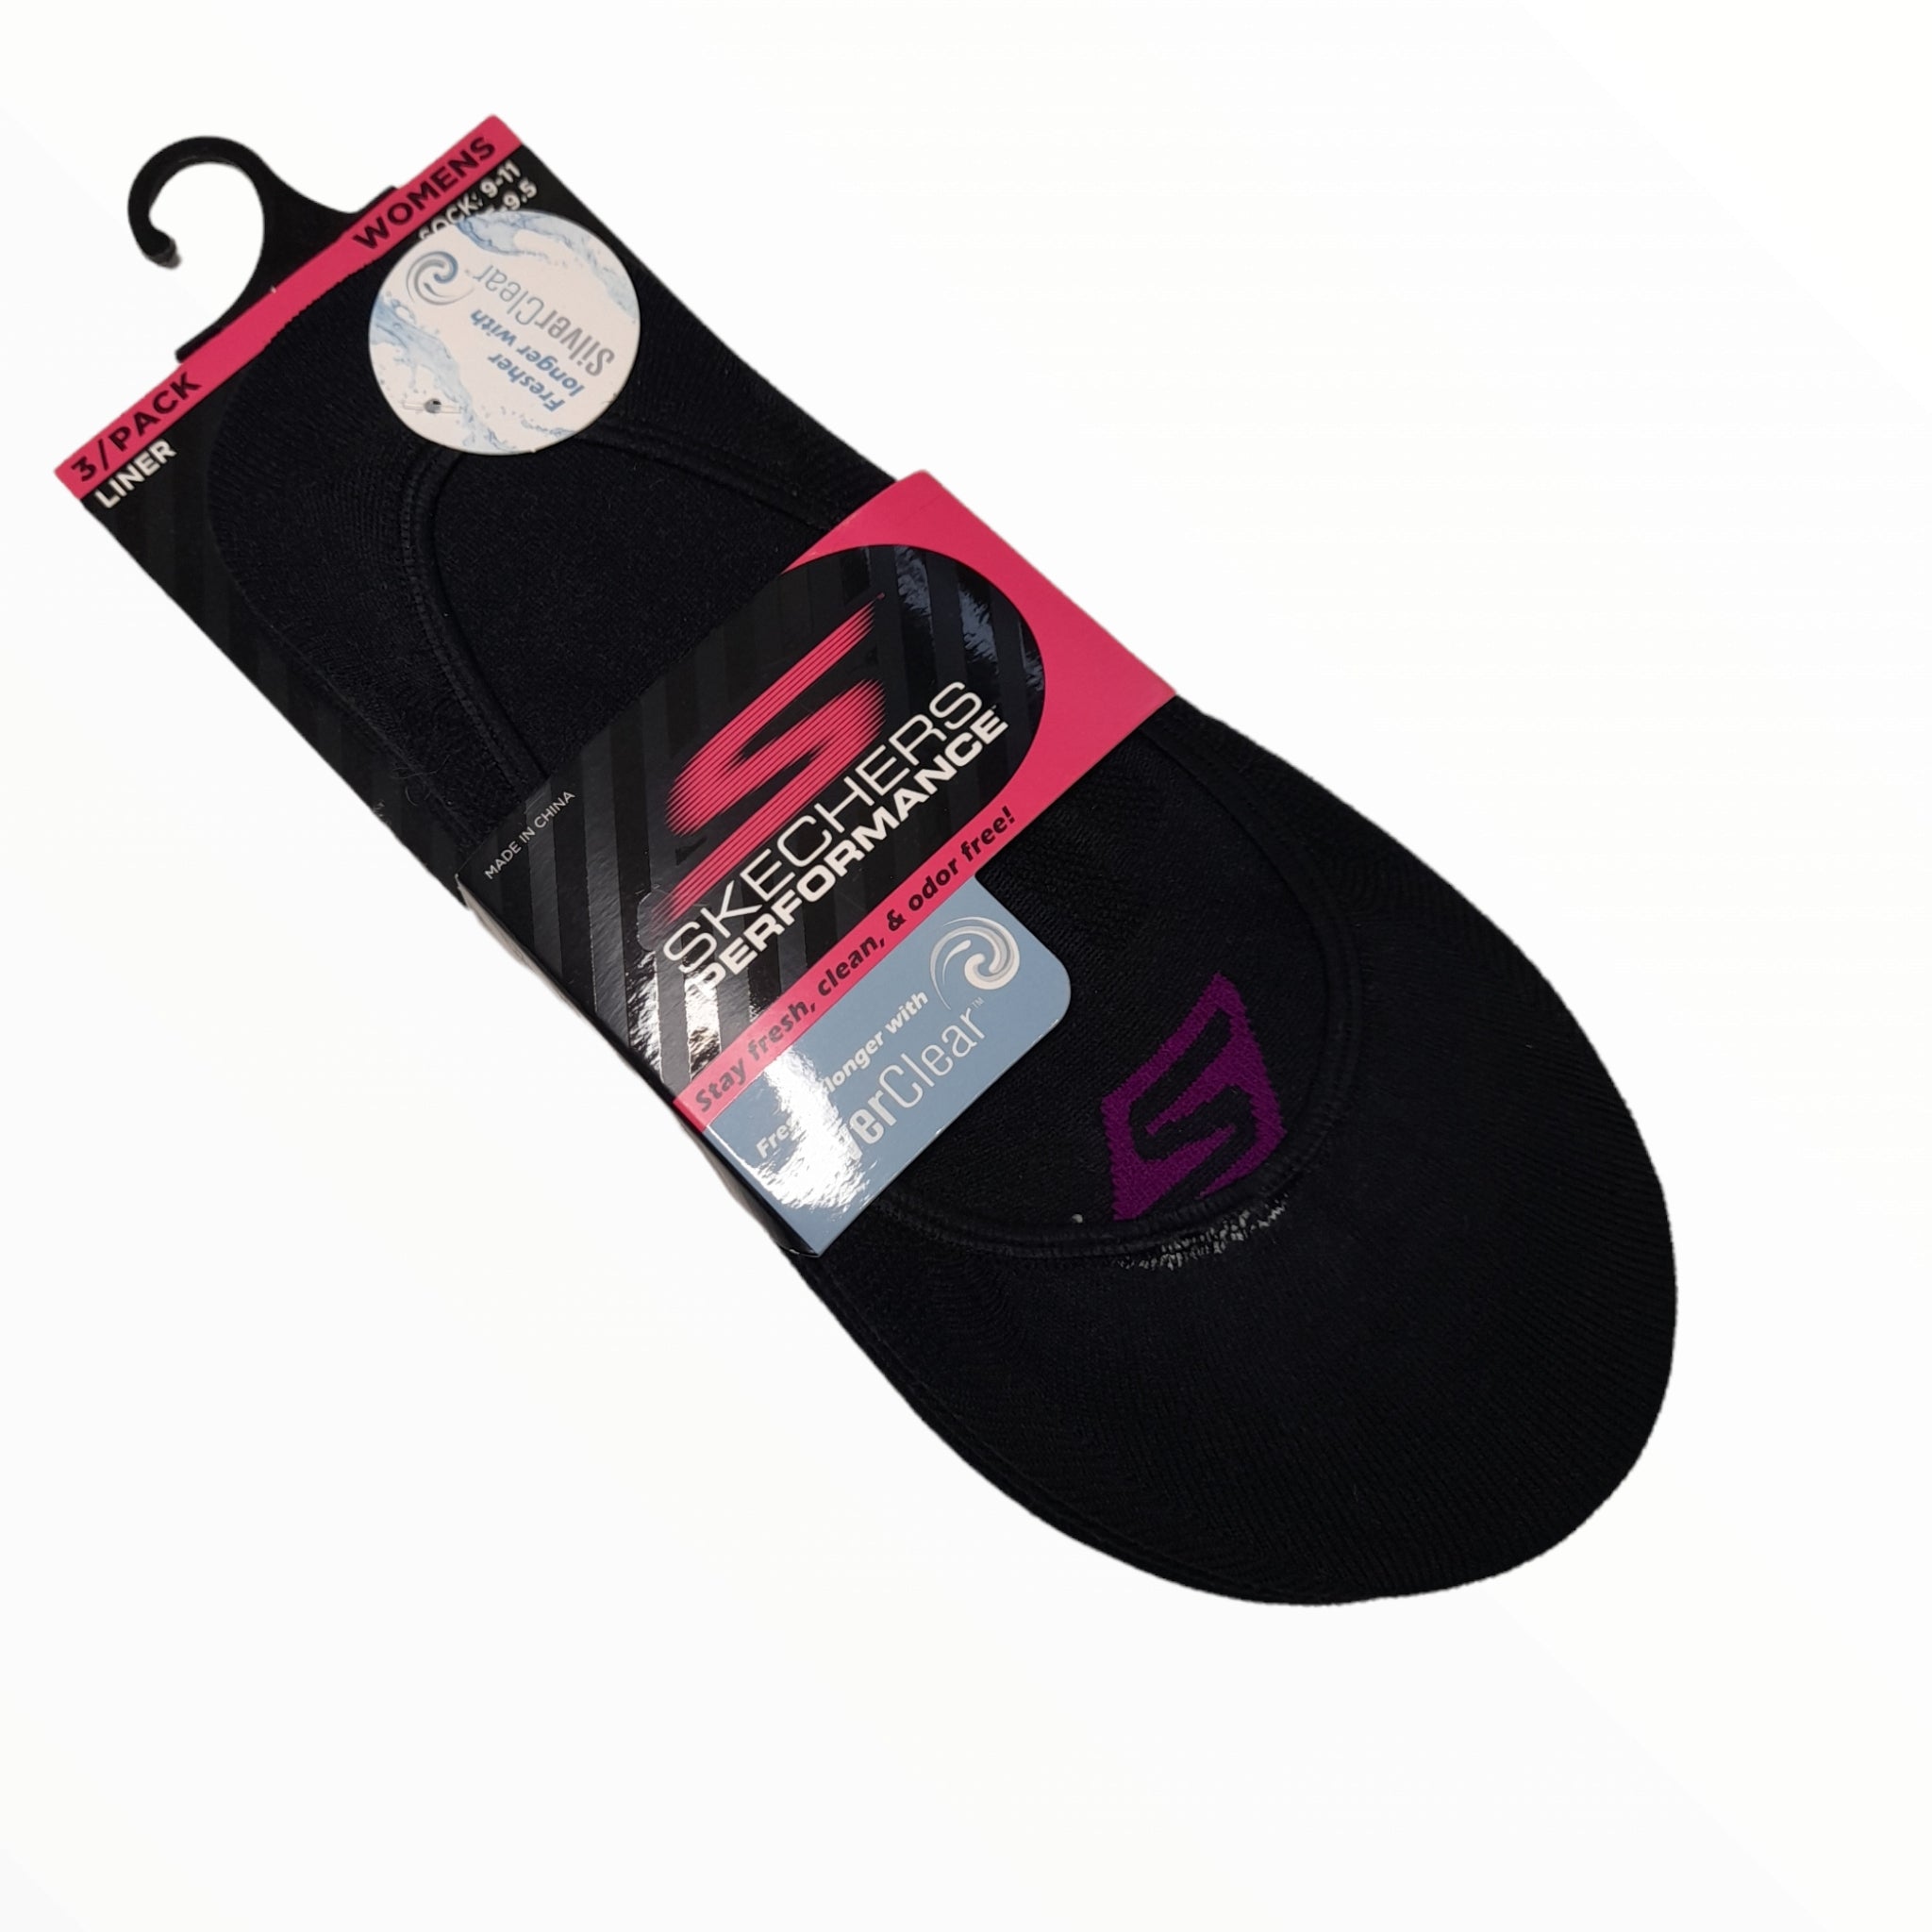 Skechers Socks 3pk - shoe&amp;me - Skechers - Socks - Accessories/Products, Hosiery, Mens, Womens